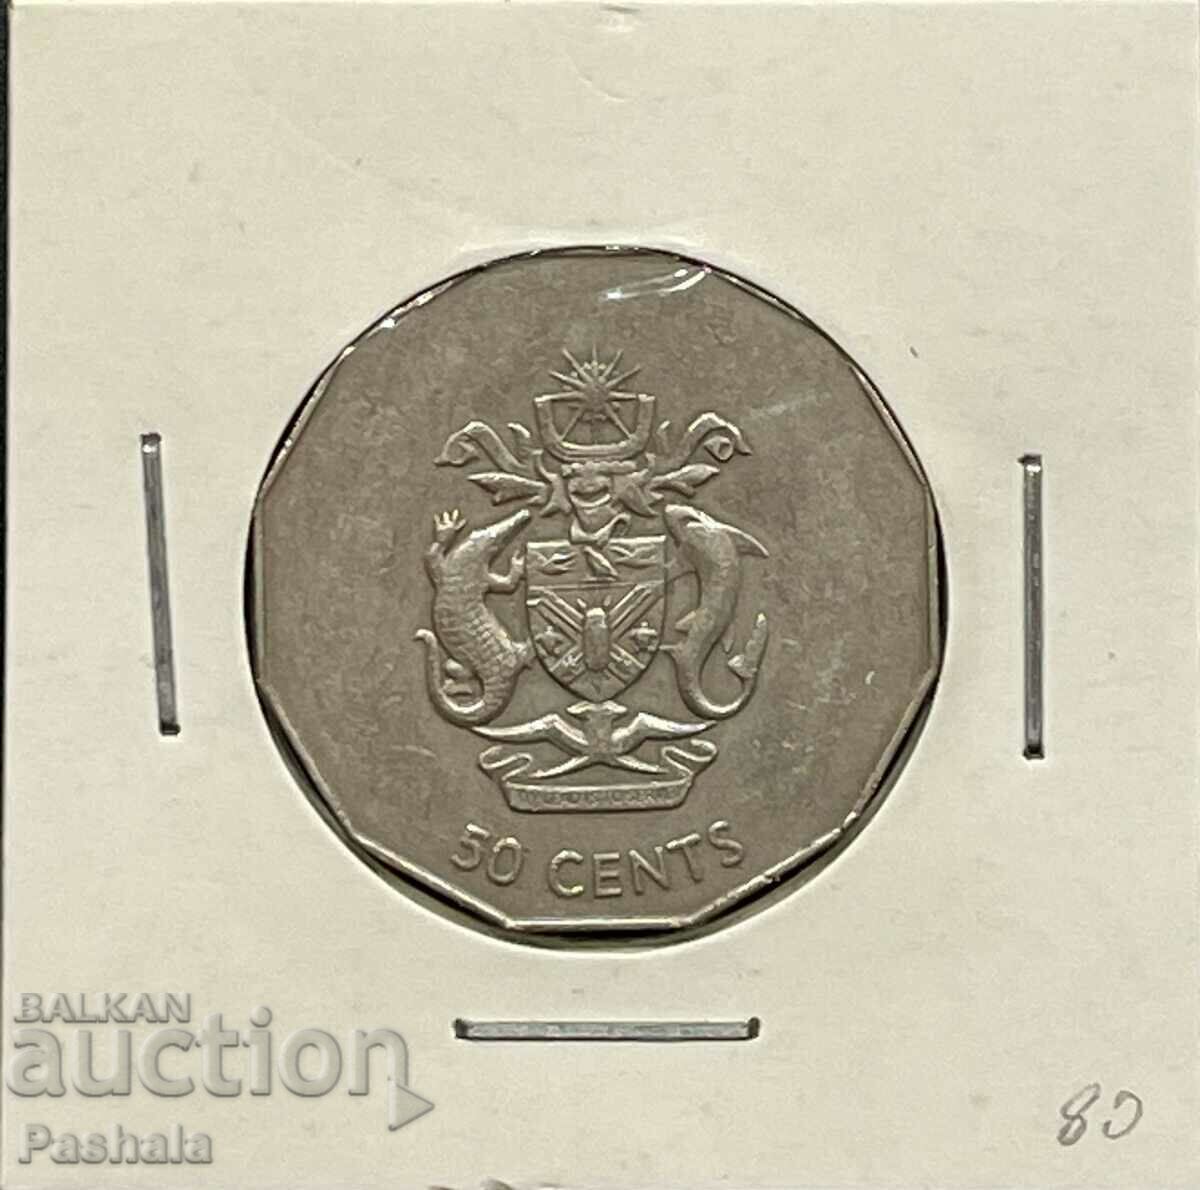 Solomon Islands 50 cents 1995